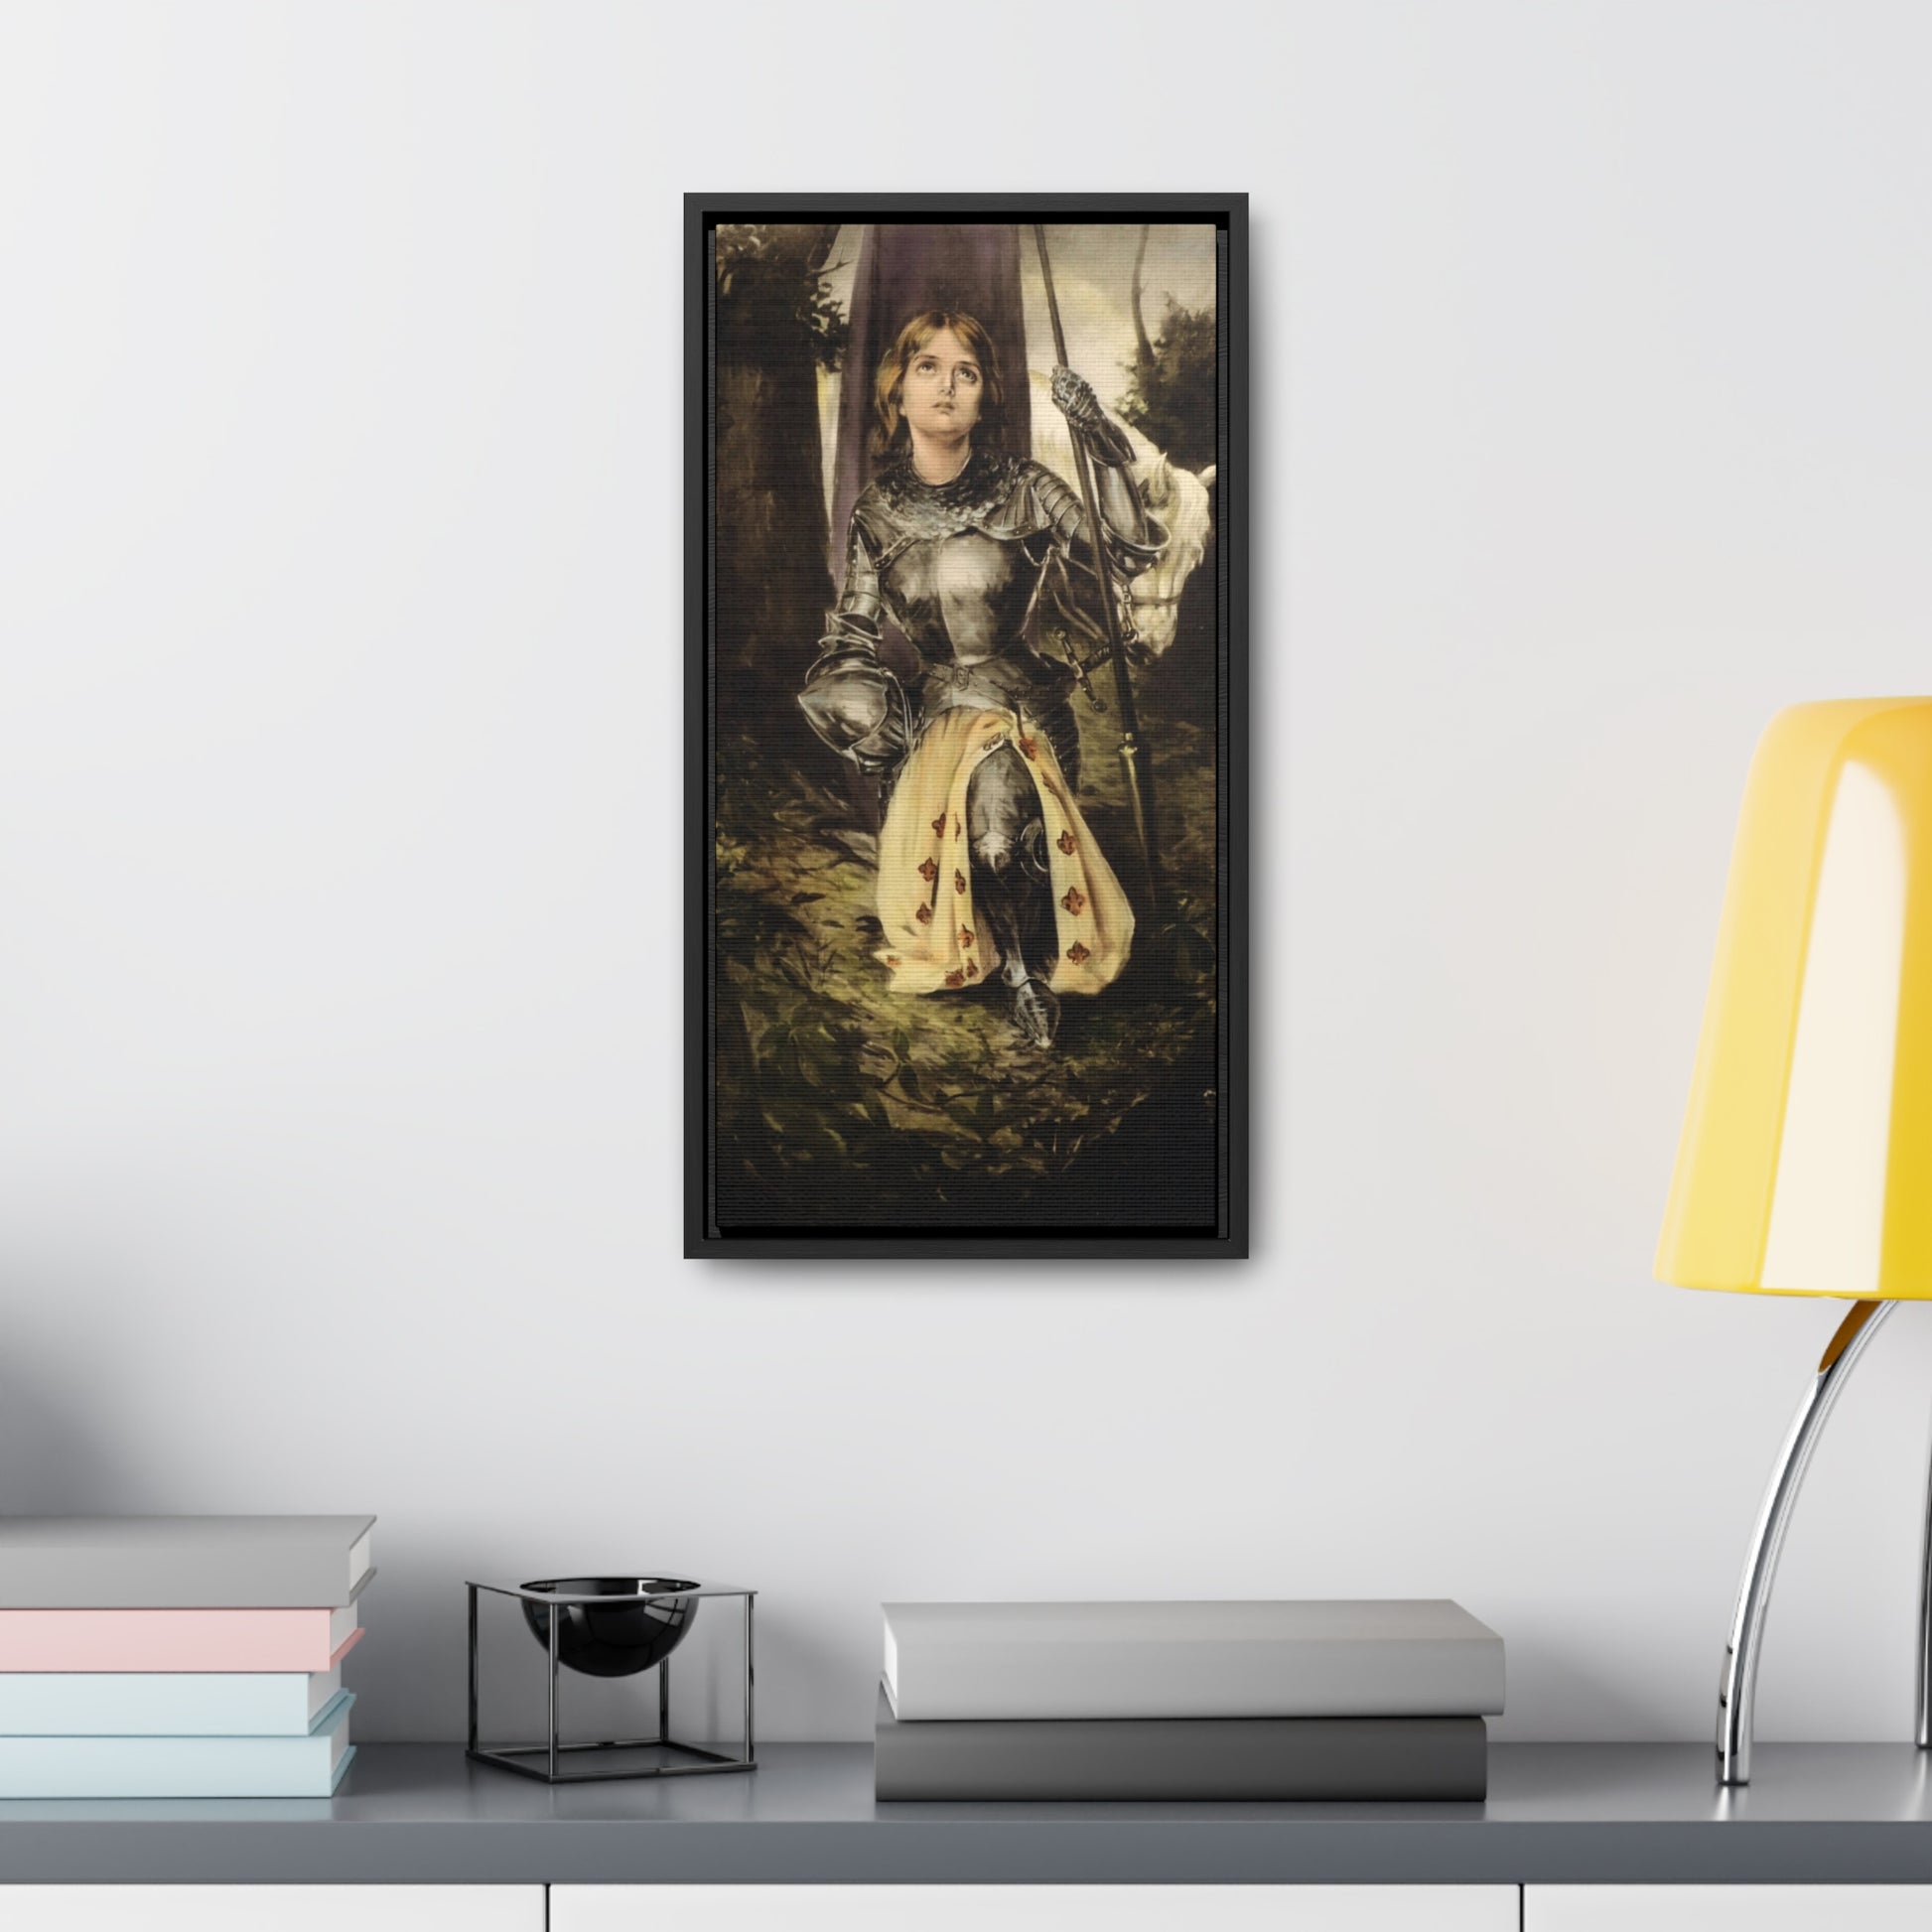 St. Joan of Arc - Framed Gallery Canvas Wrap - Sanctus Art Gallery